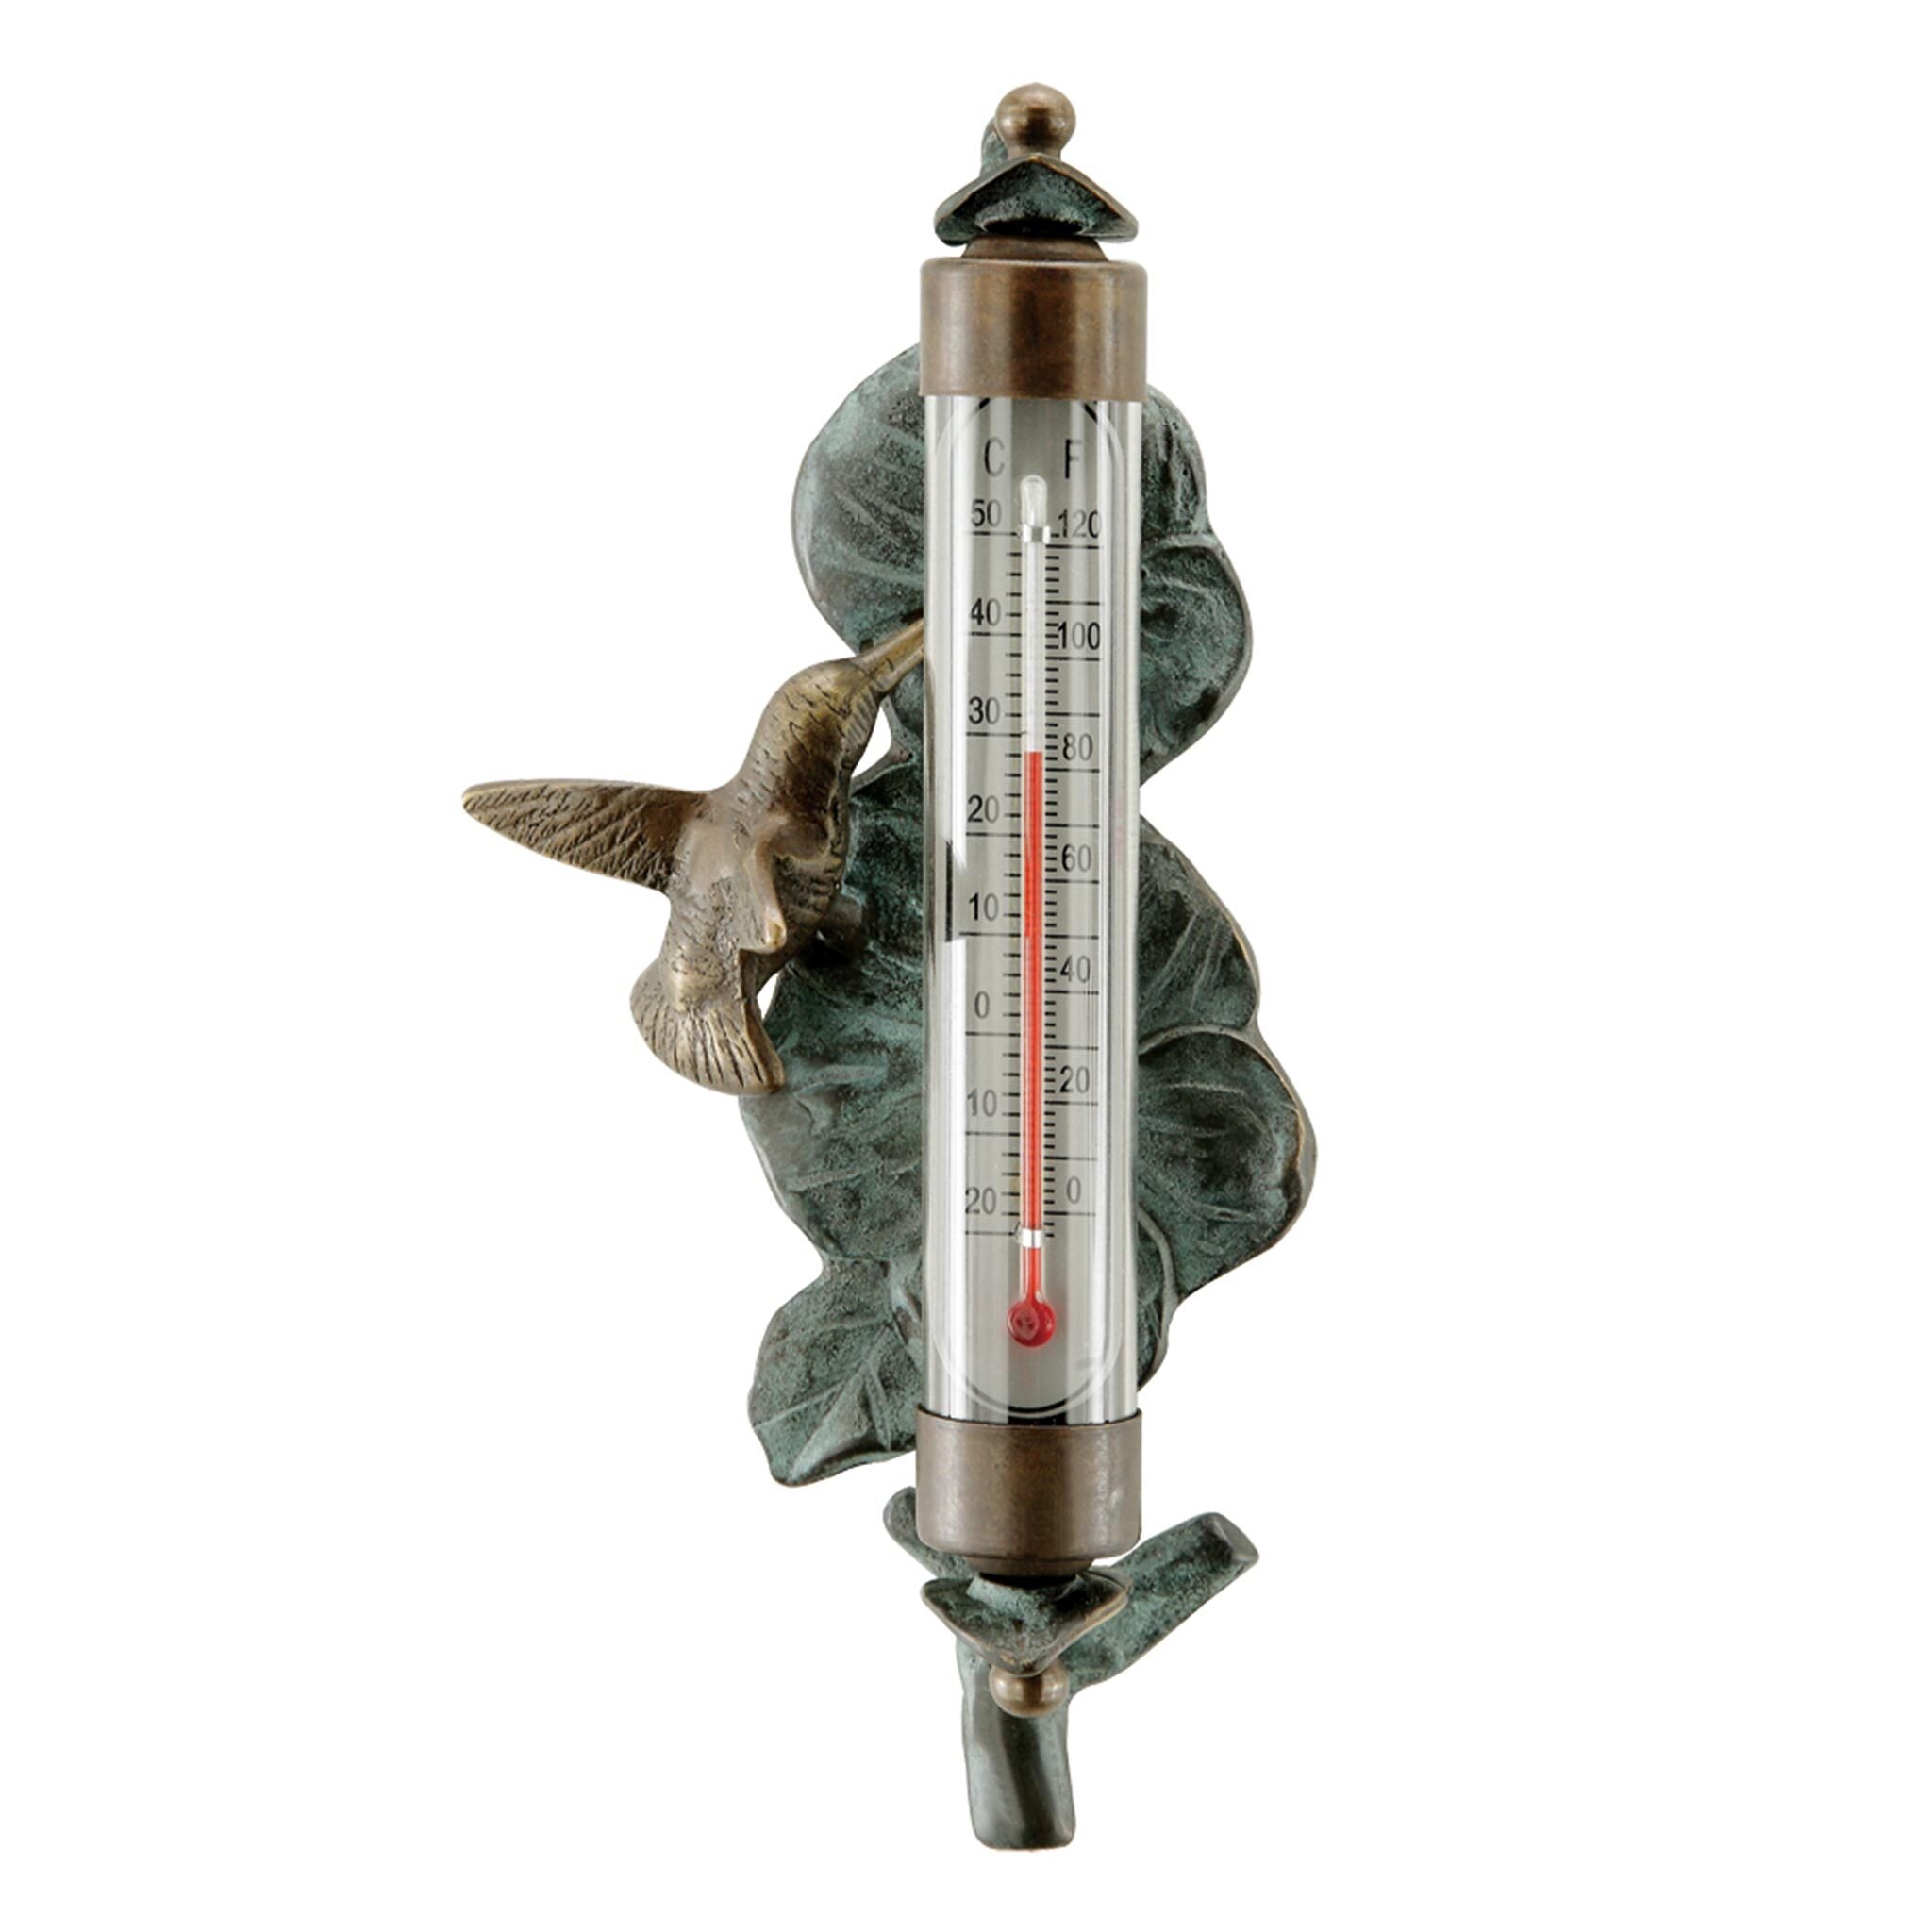 Hummingbird Wall Mounted Thermometer